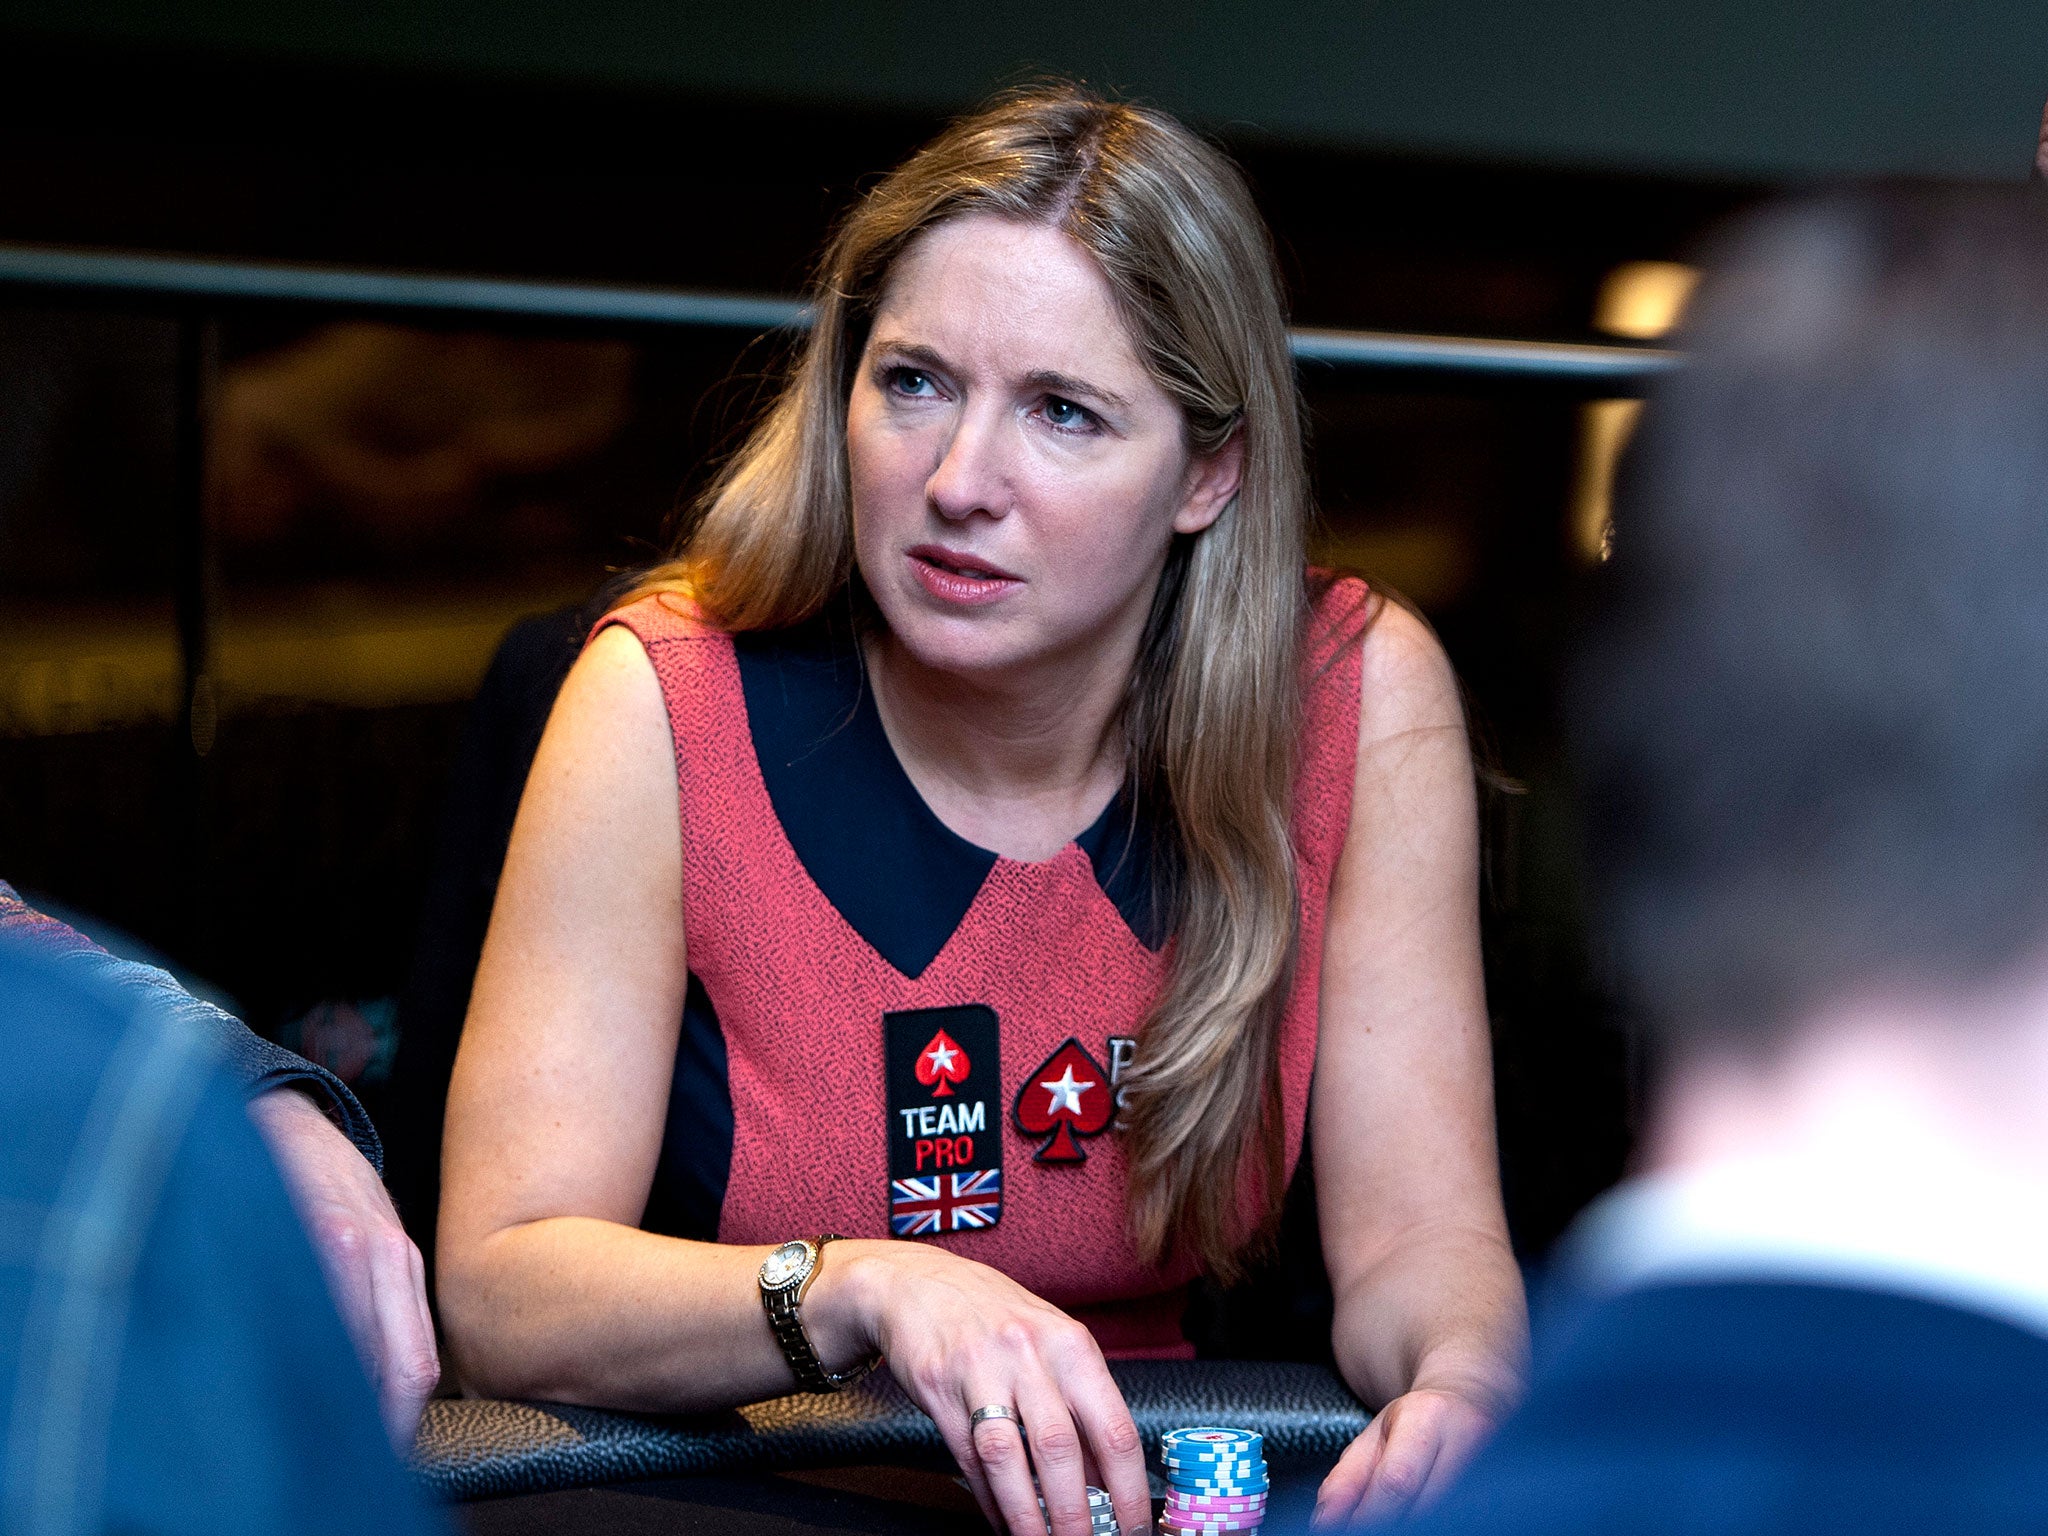 Professional poker player Victoria Coren